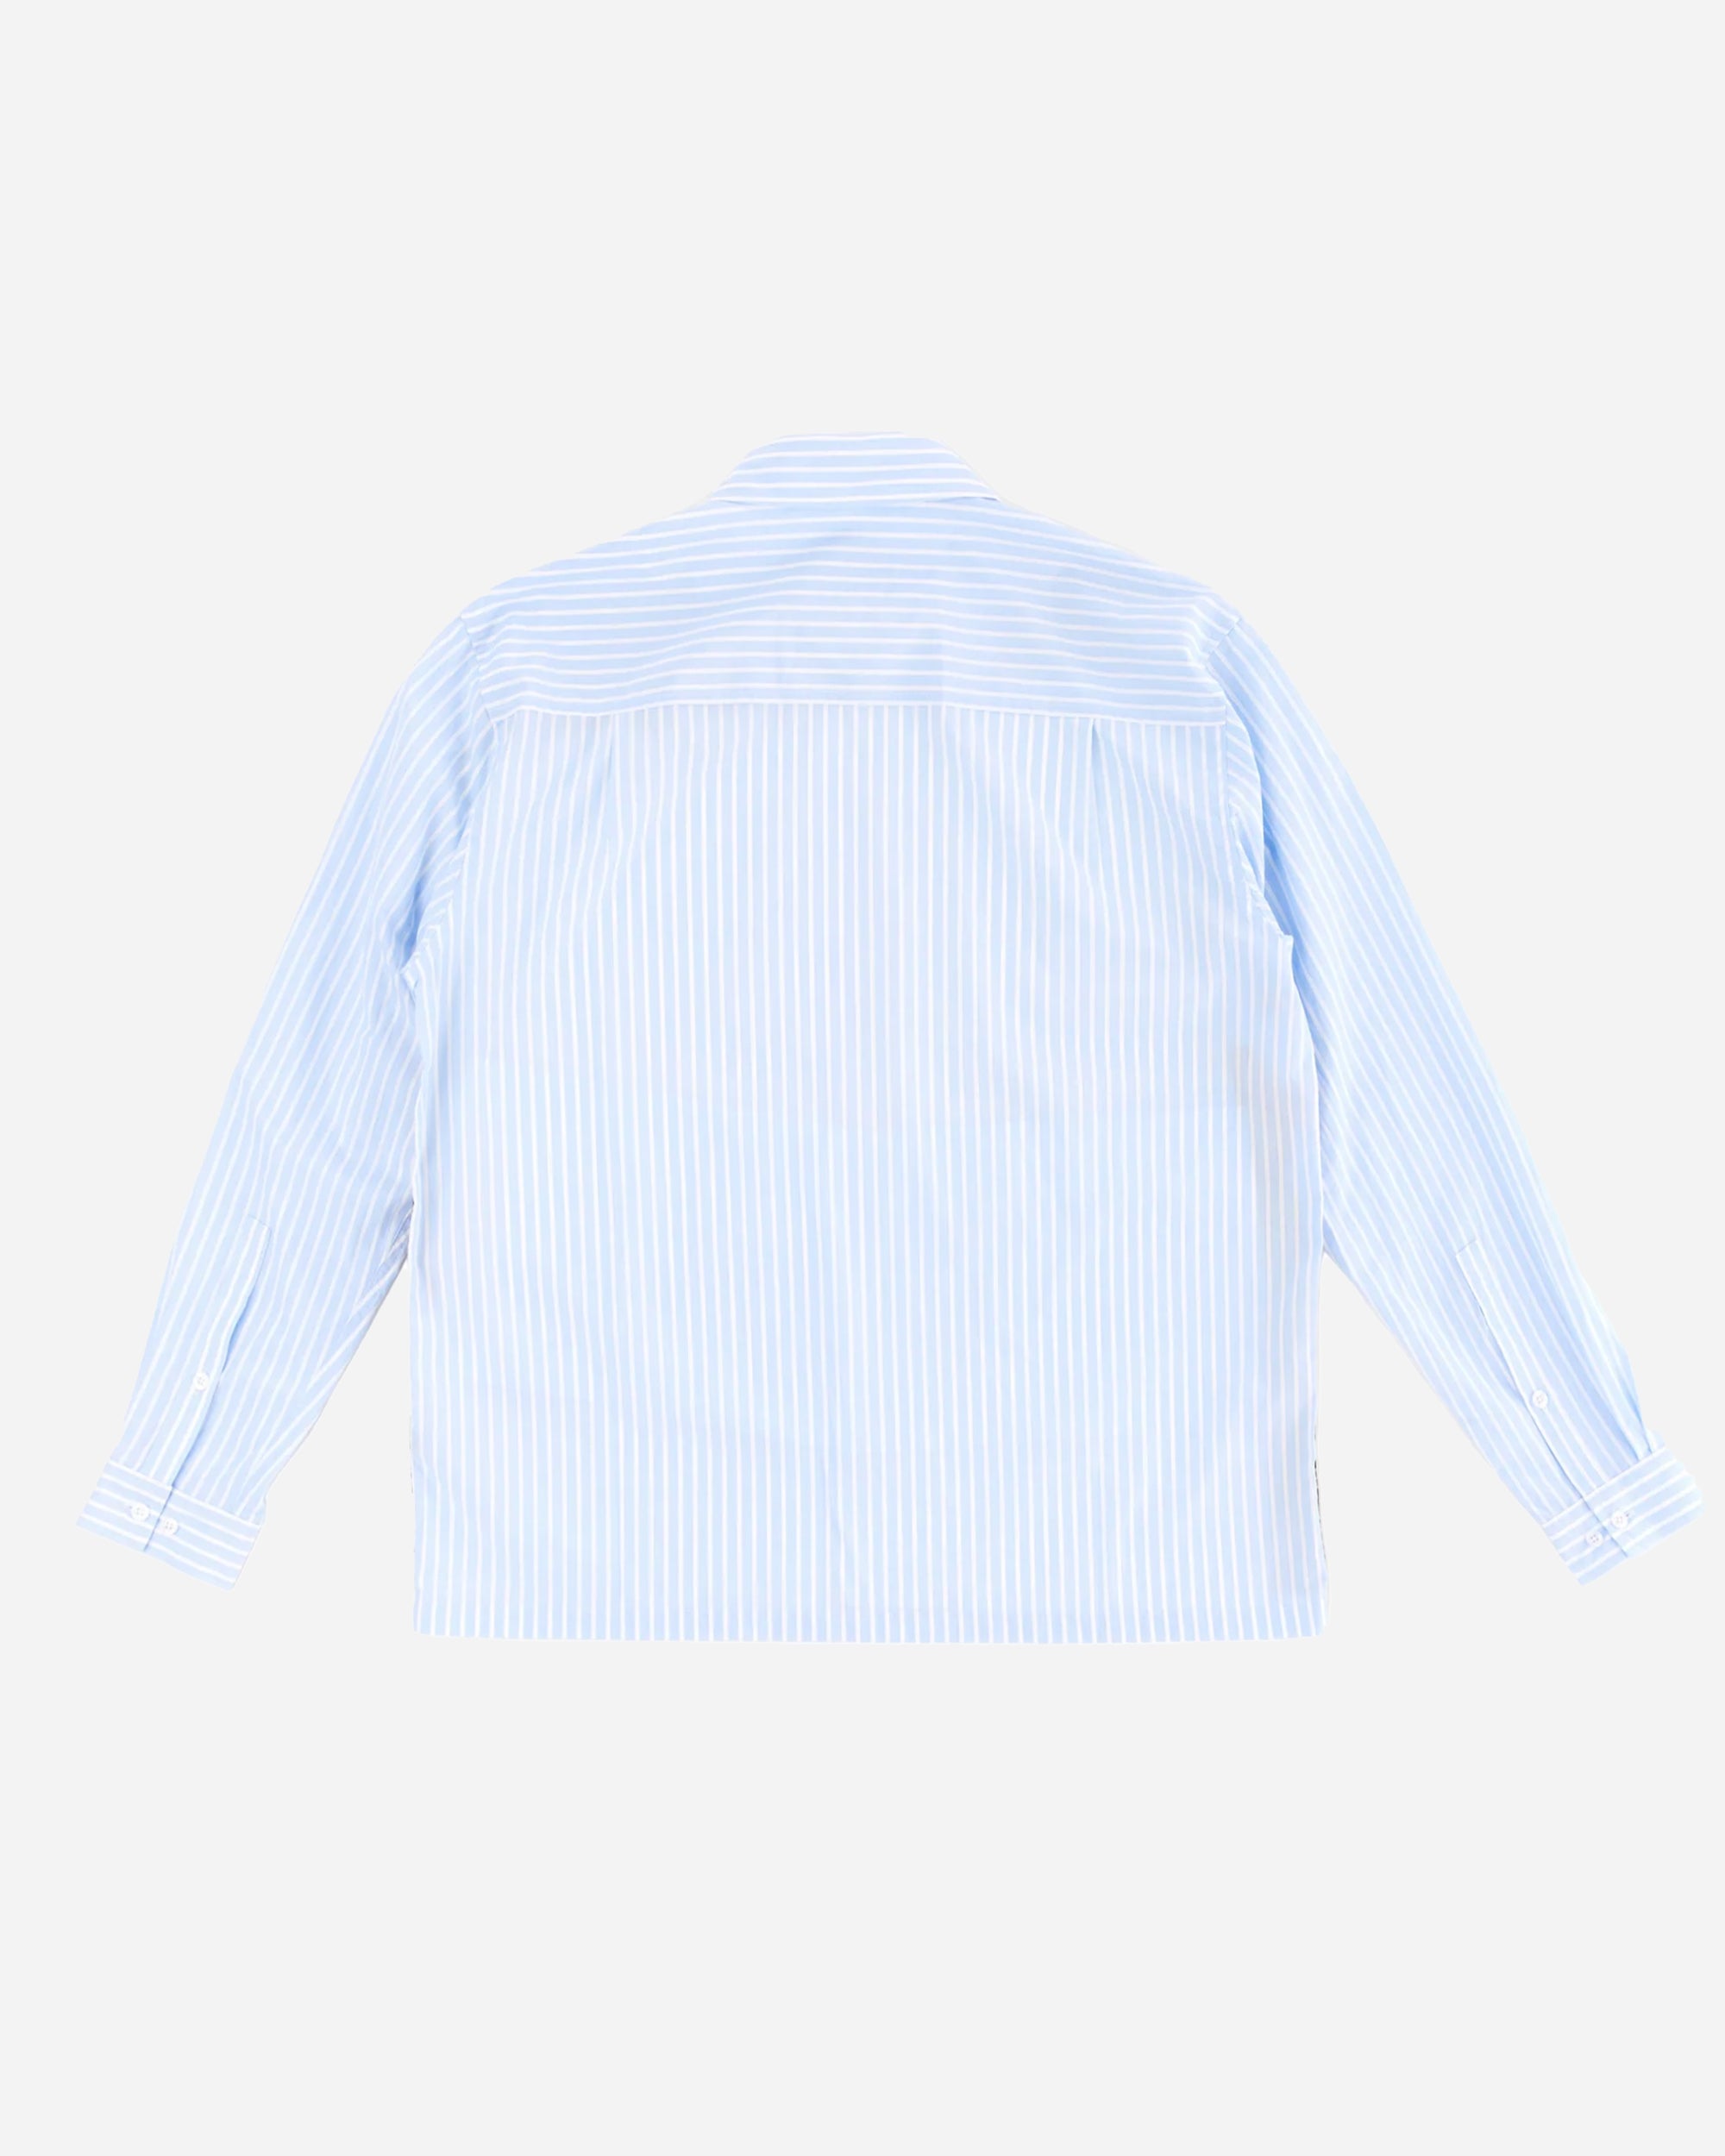 P.A.M New Beginnings Stripe LS Shirt CONFLICT STRIPE 3772-CFST